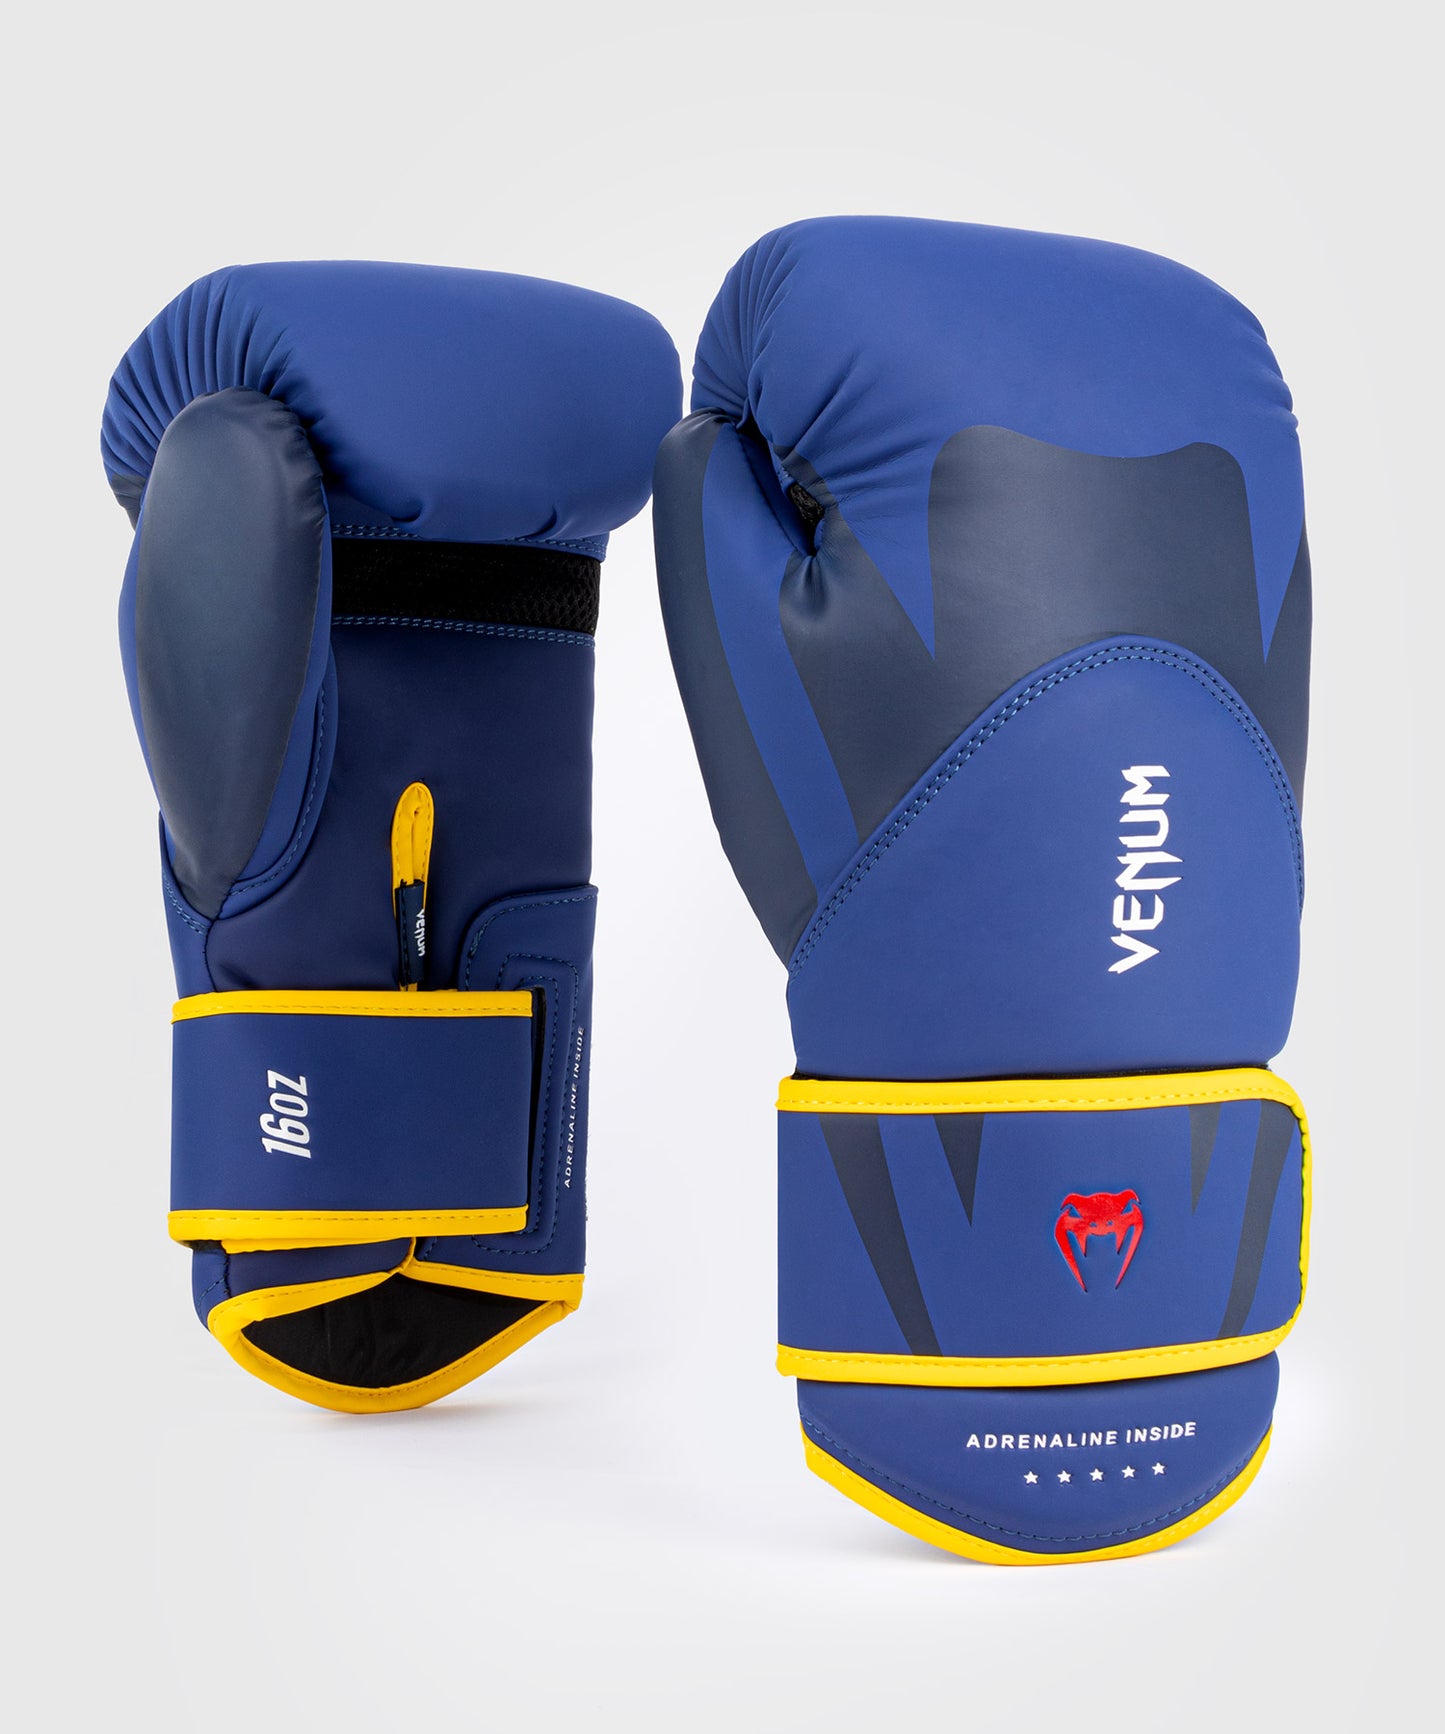 Venum Challenger 4.0 Boxing Gloves - Sport 88